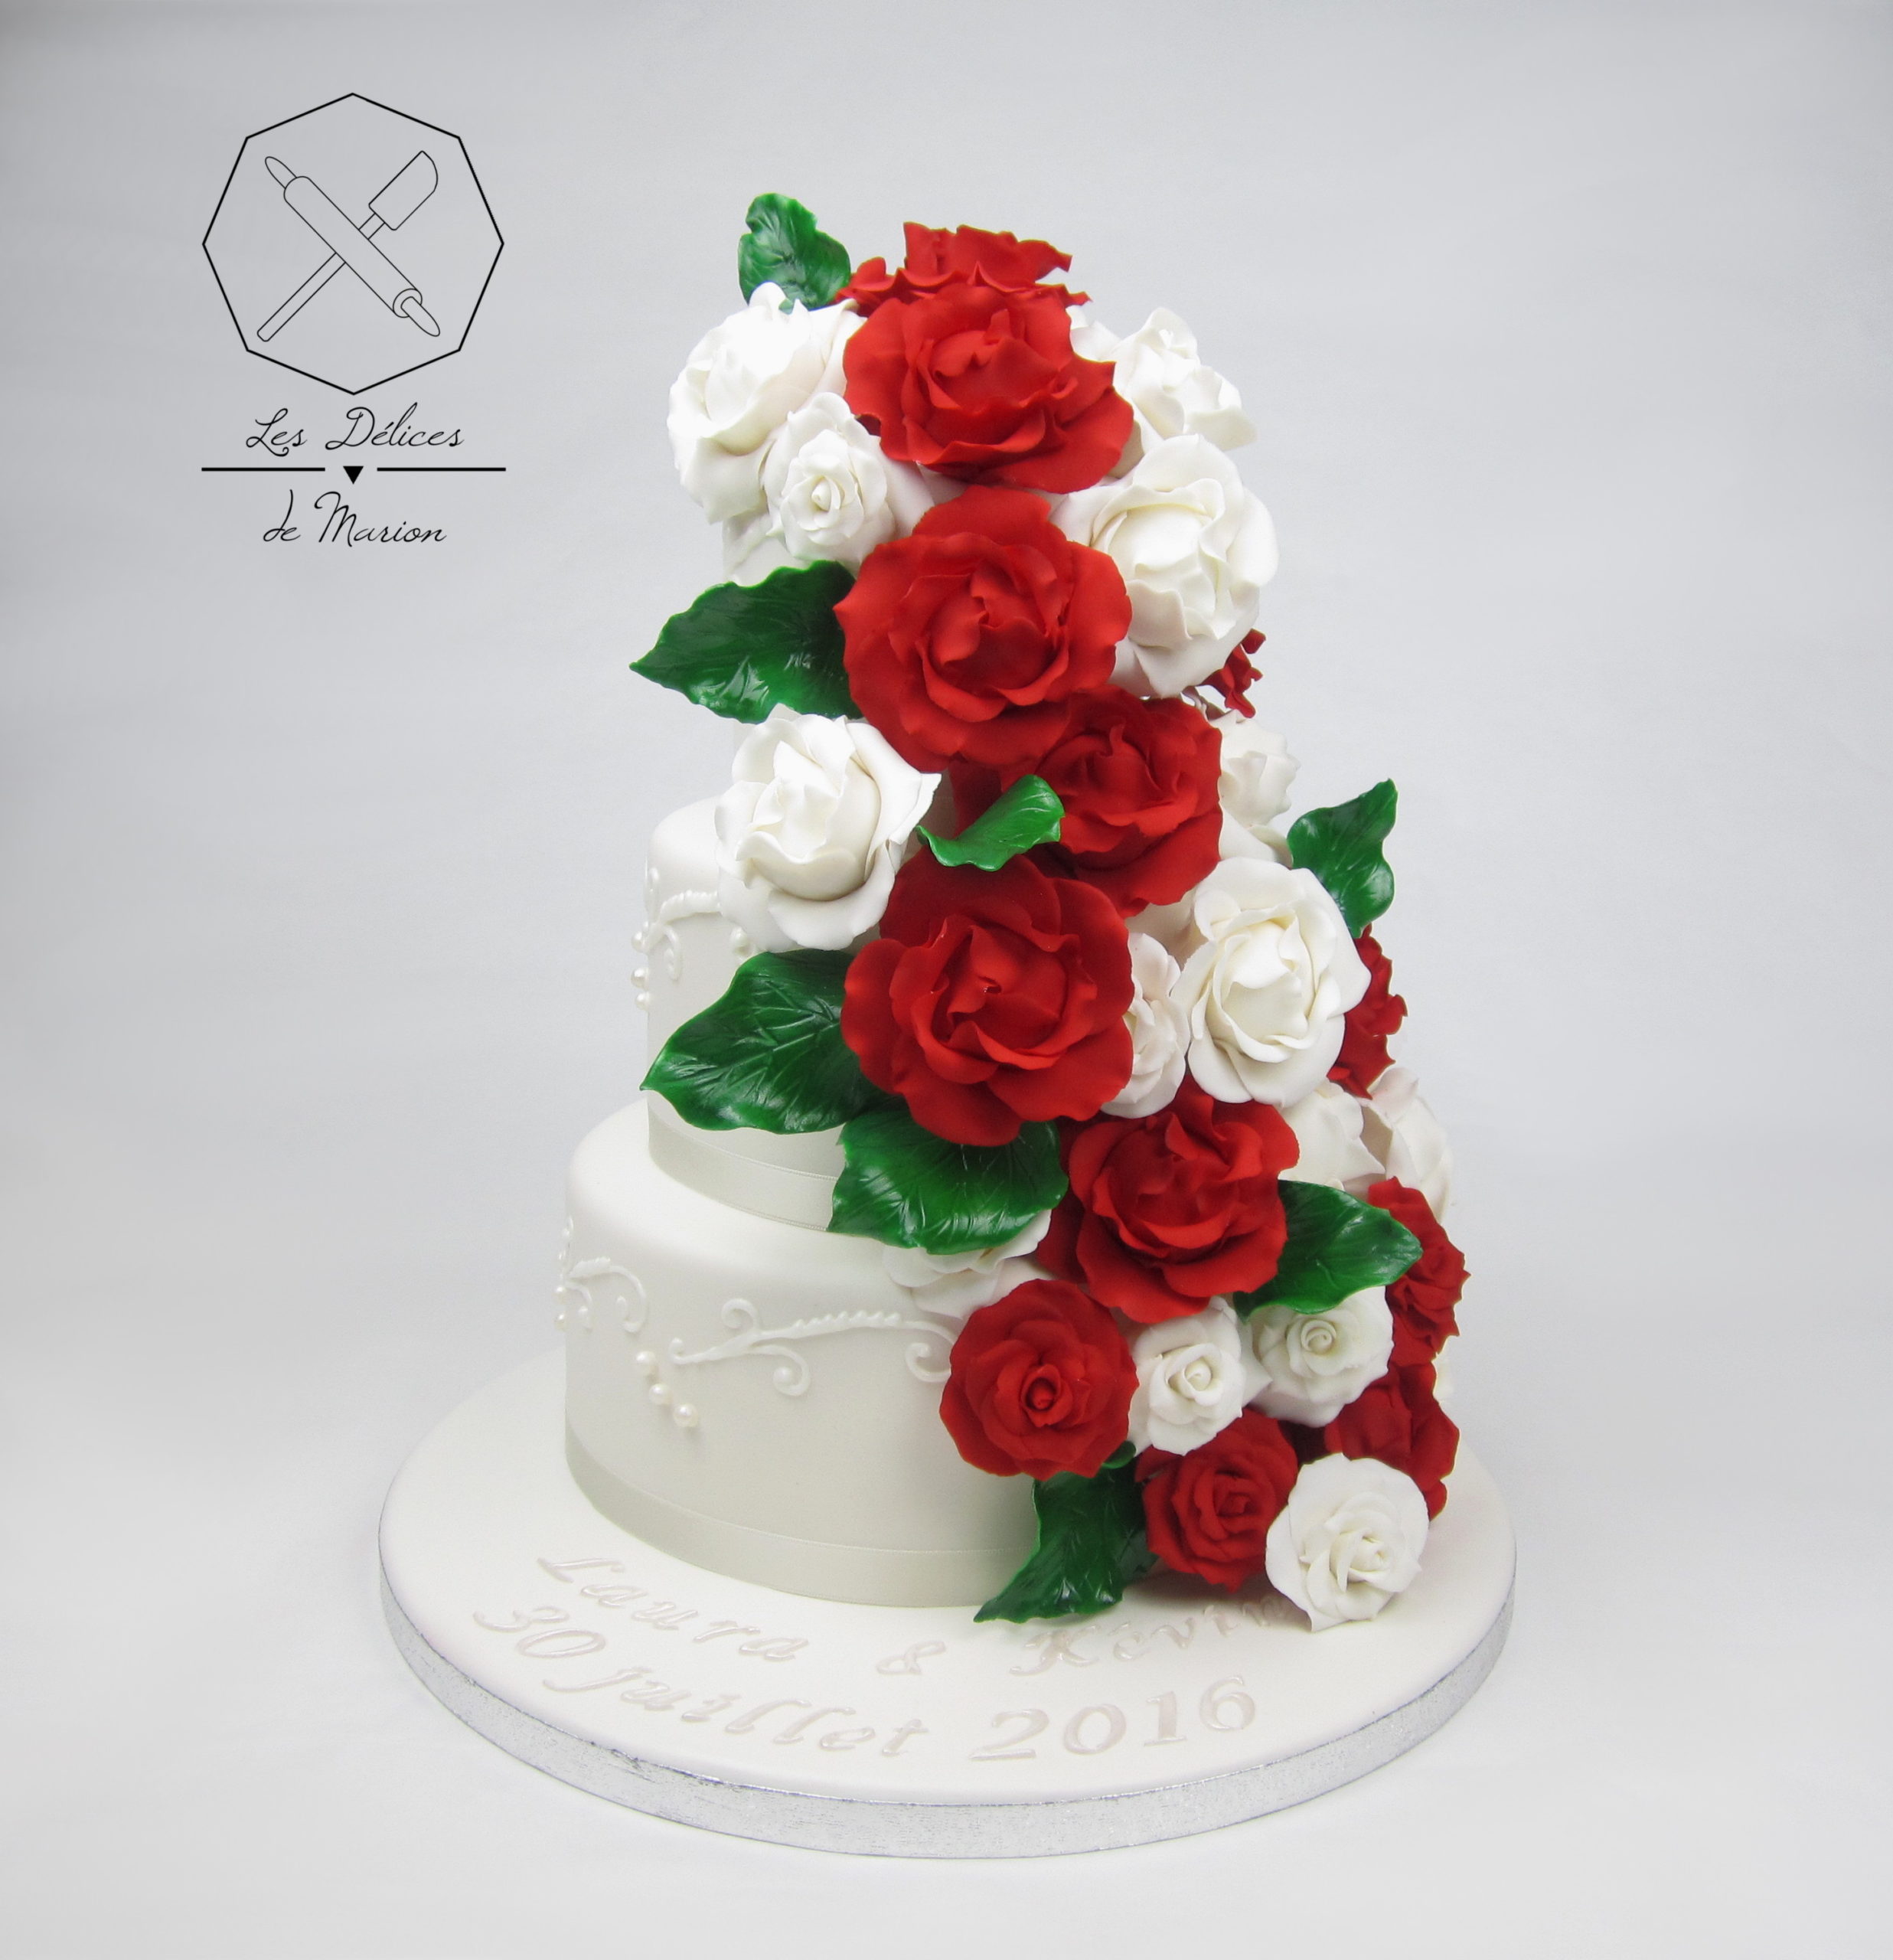 gateau_wedding-cake_roses_blanc_rouge_arabesques_cake-design_delices-marion